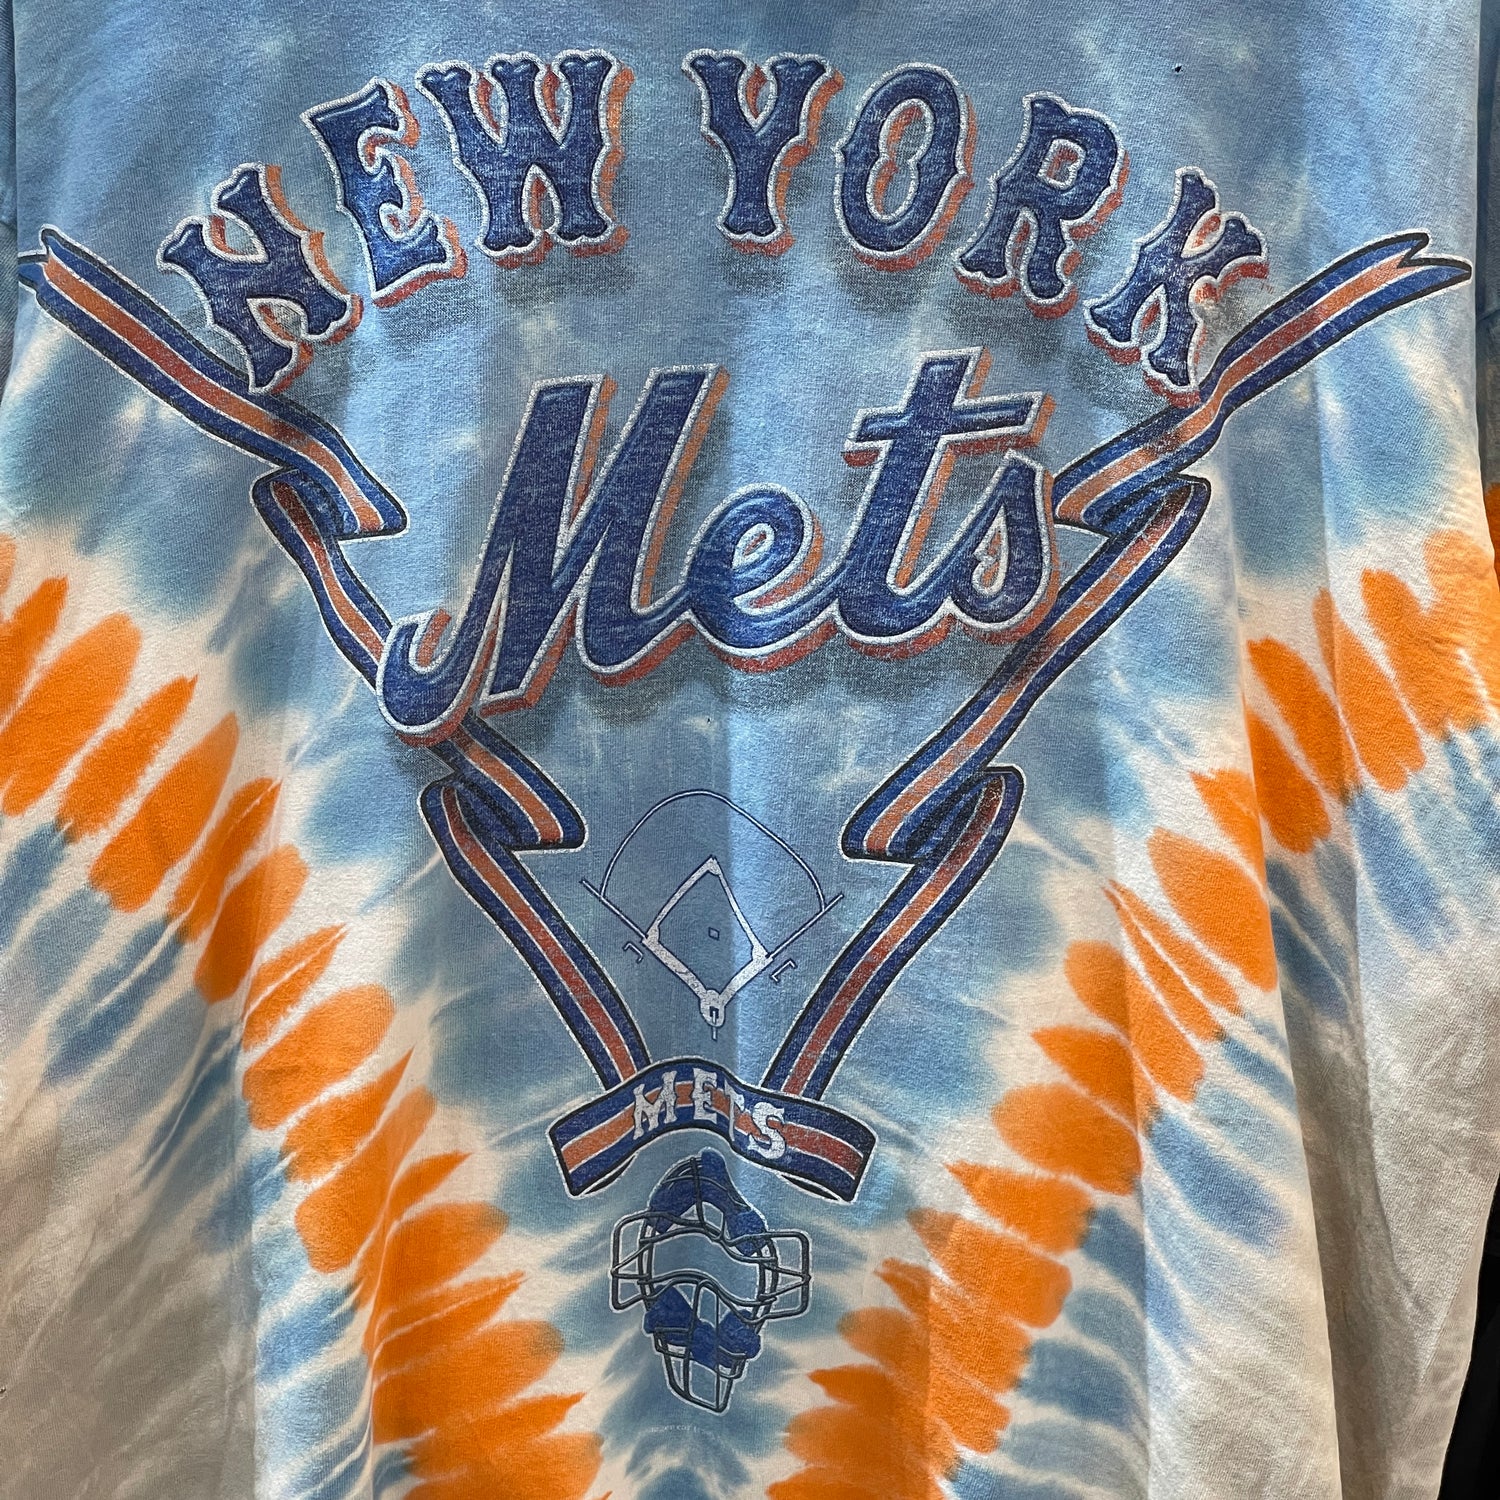 Vintage New York Mets V-neck Jersey / T-shirt -  Finland